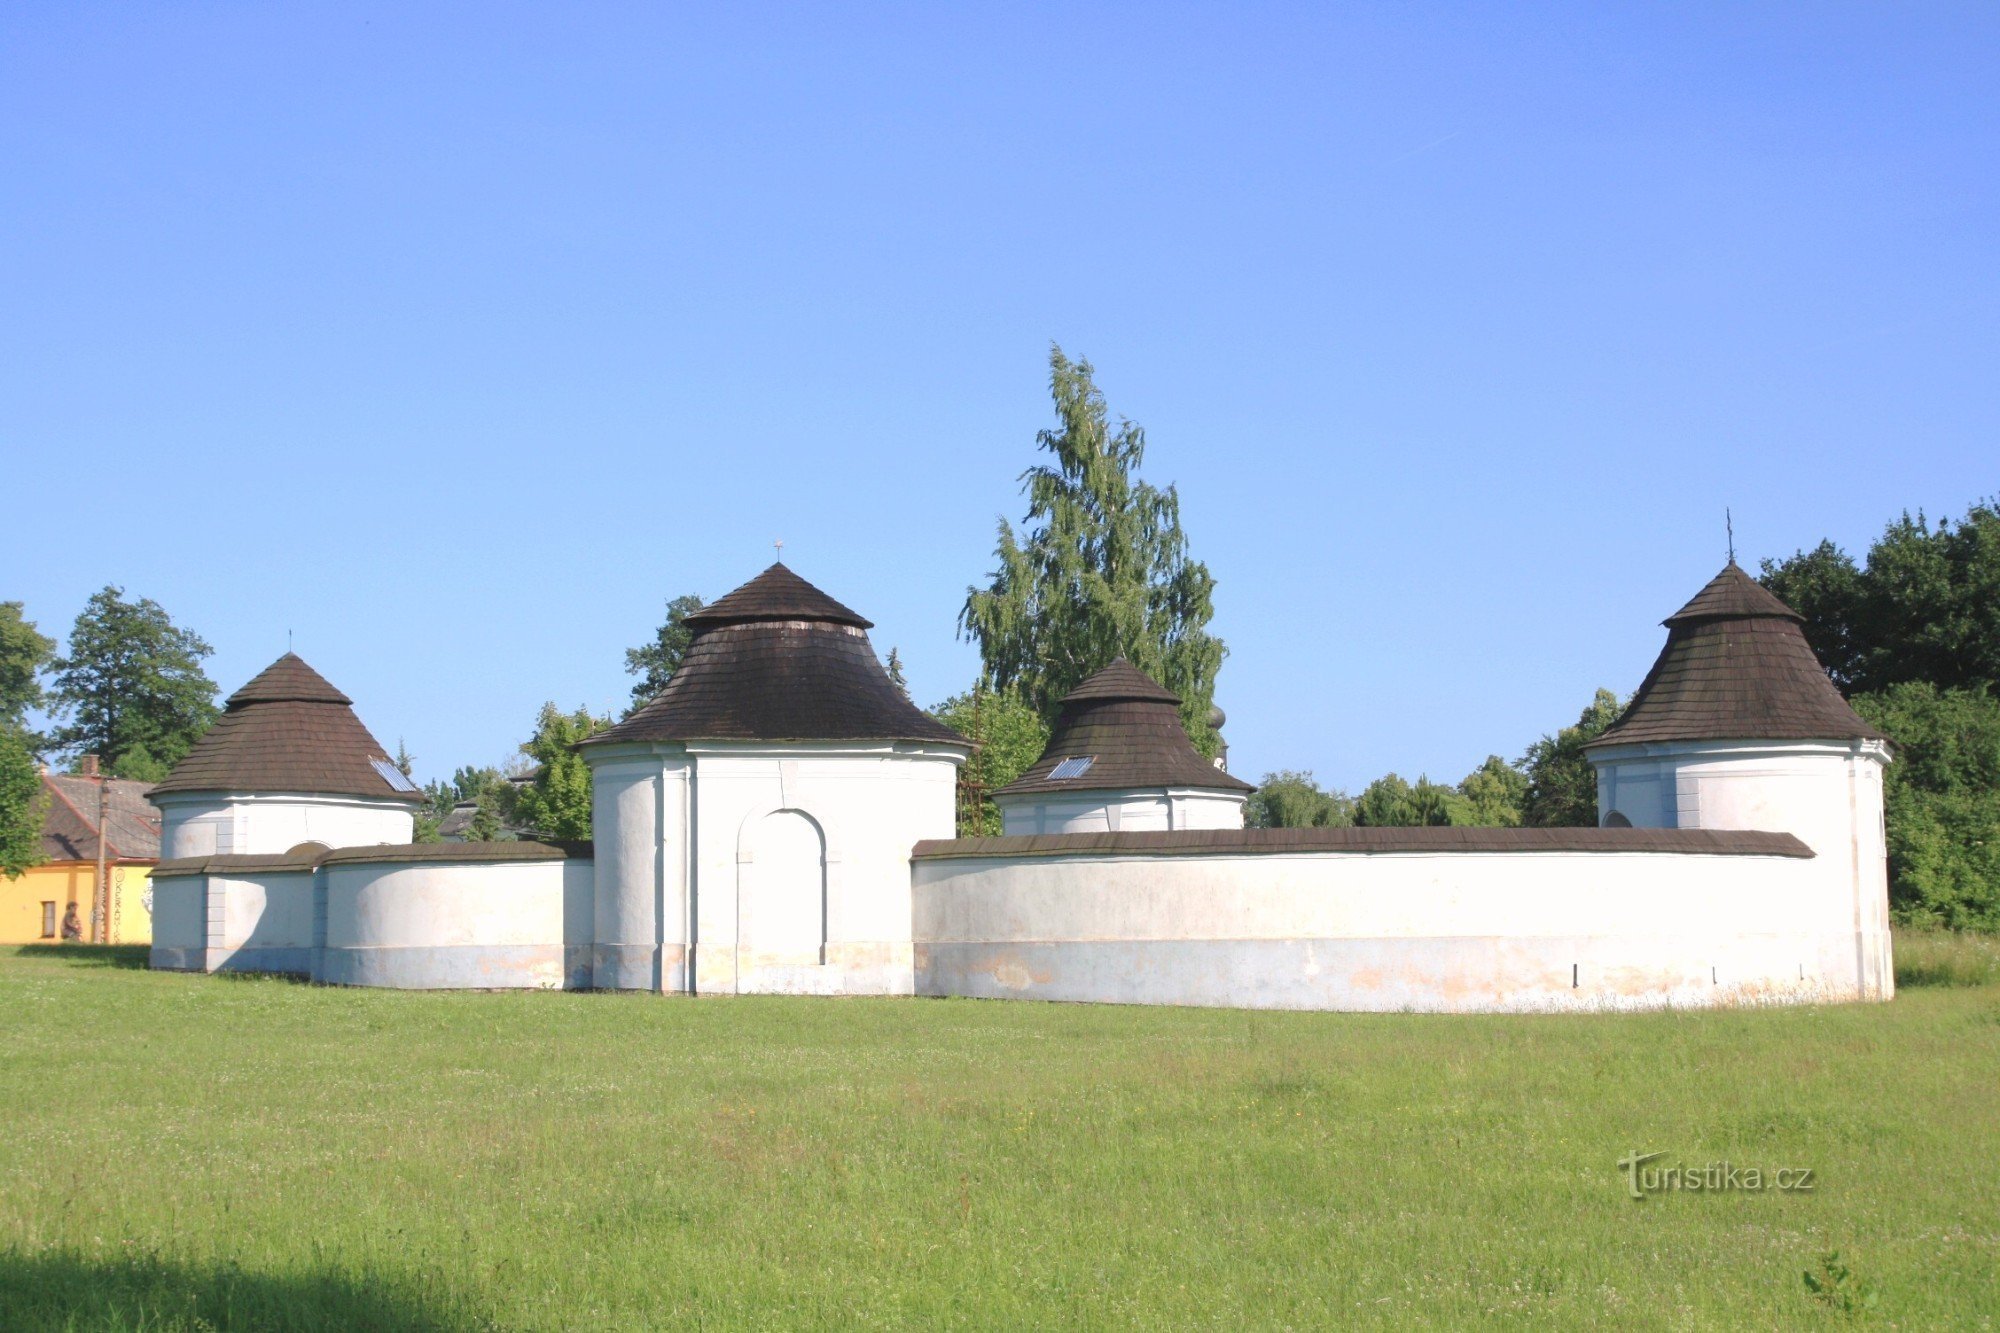 Žďár nad Sázavou - fost cimitir Ciuma